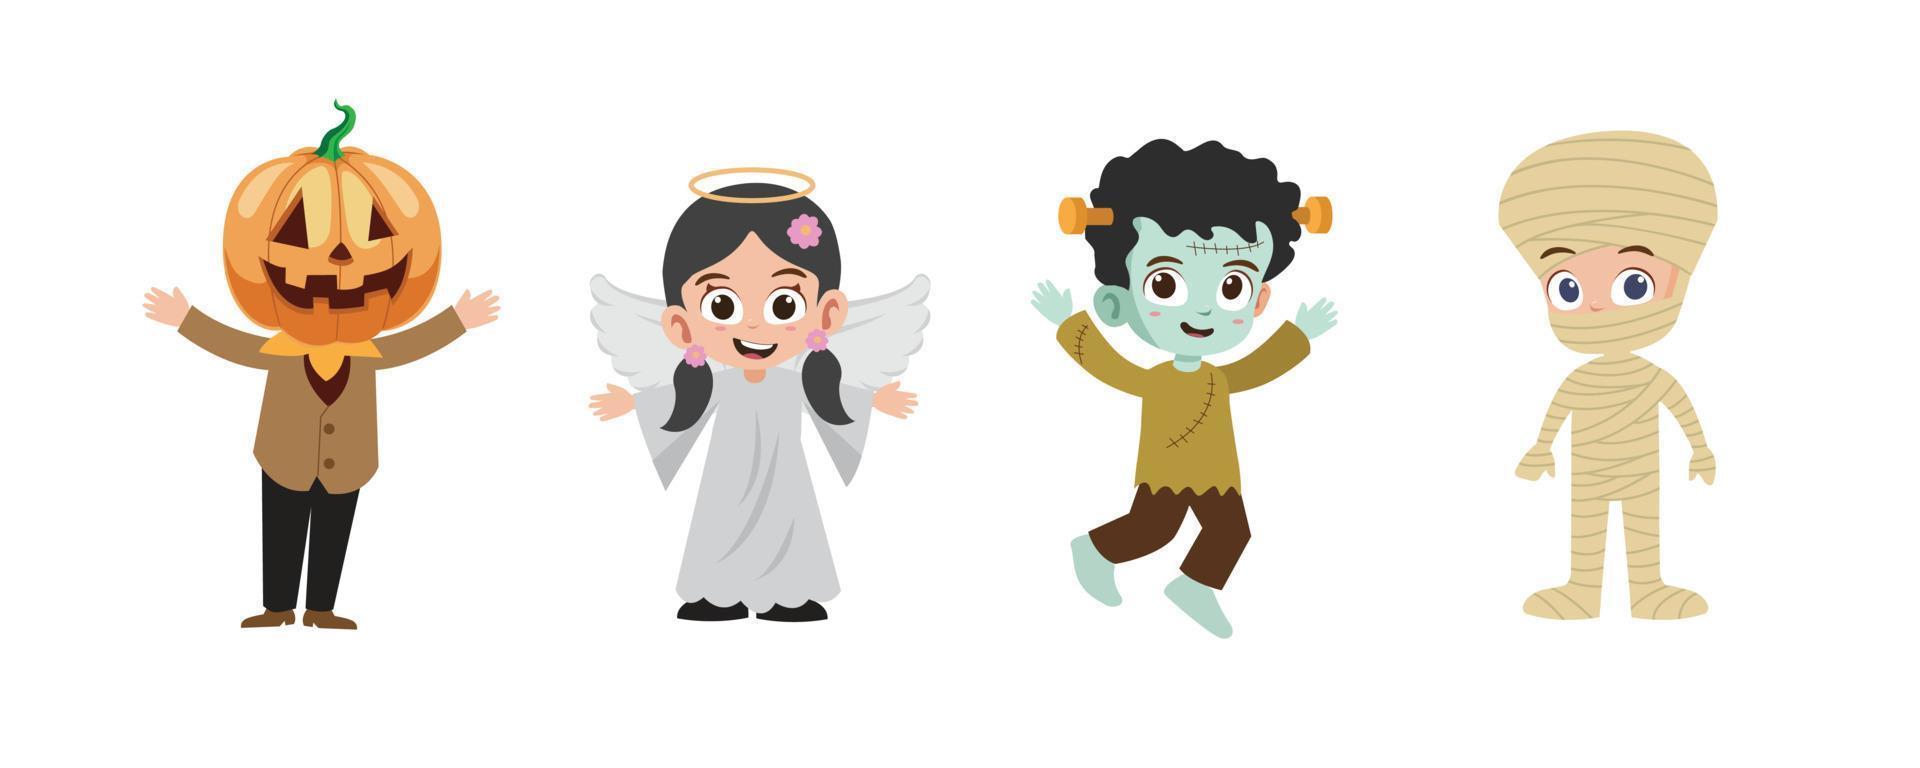 Happy Halloween cute kids character vector illustration